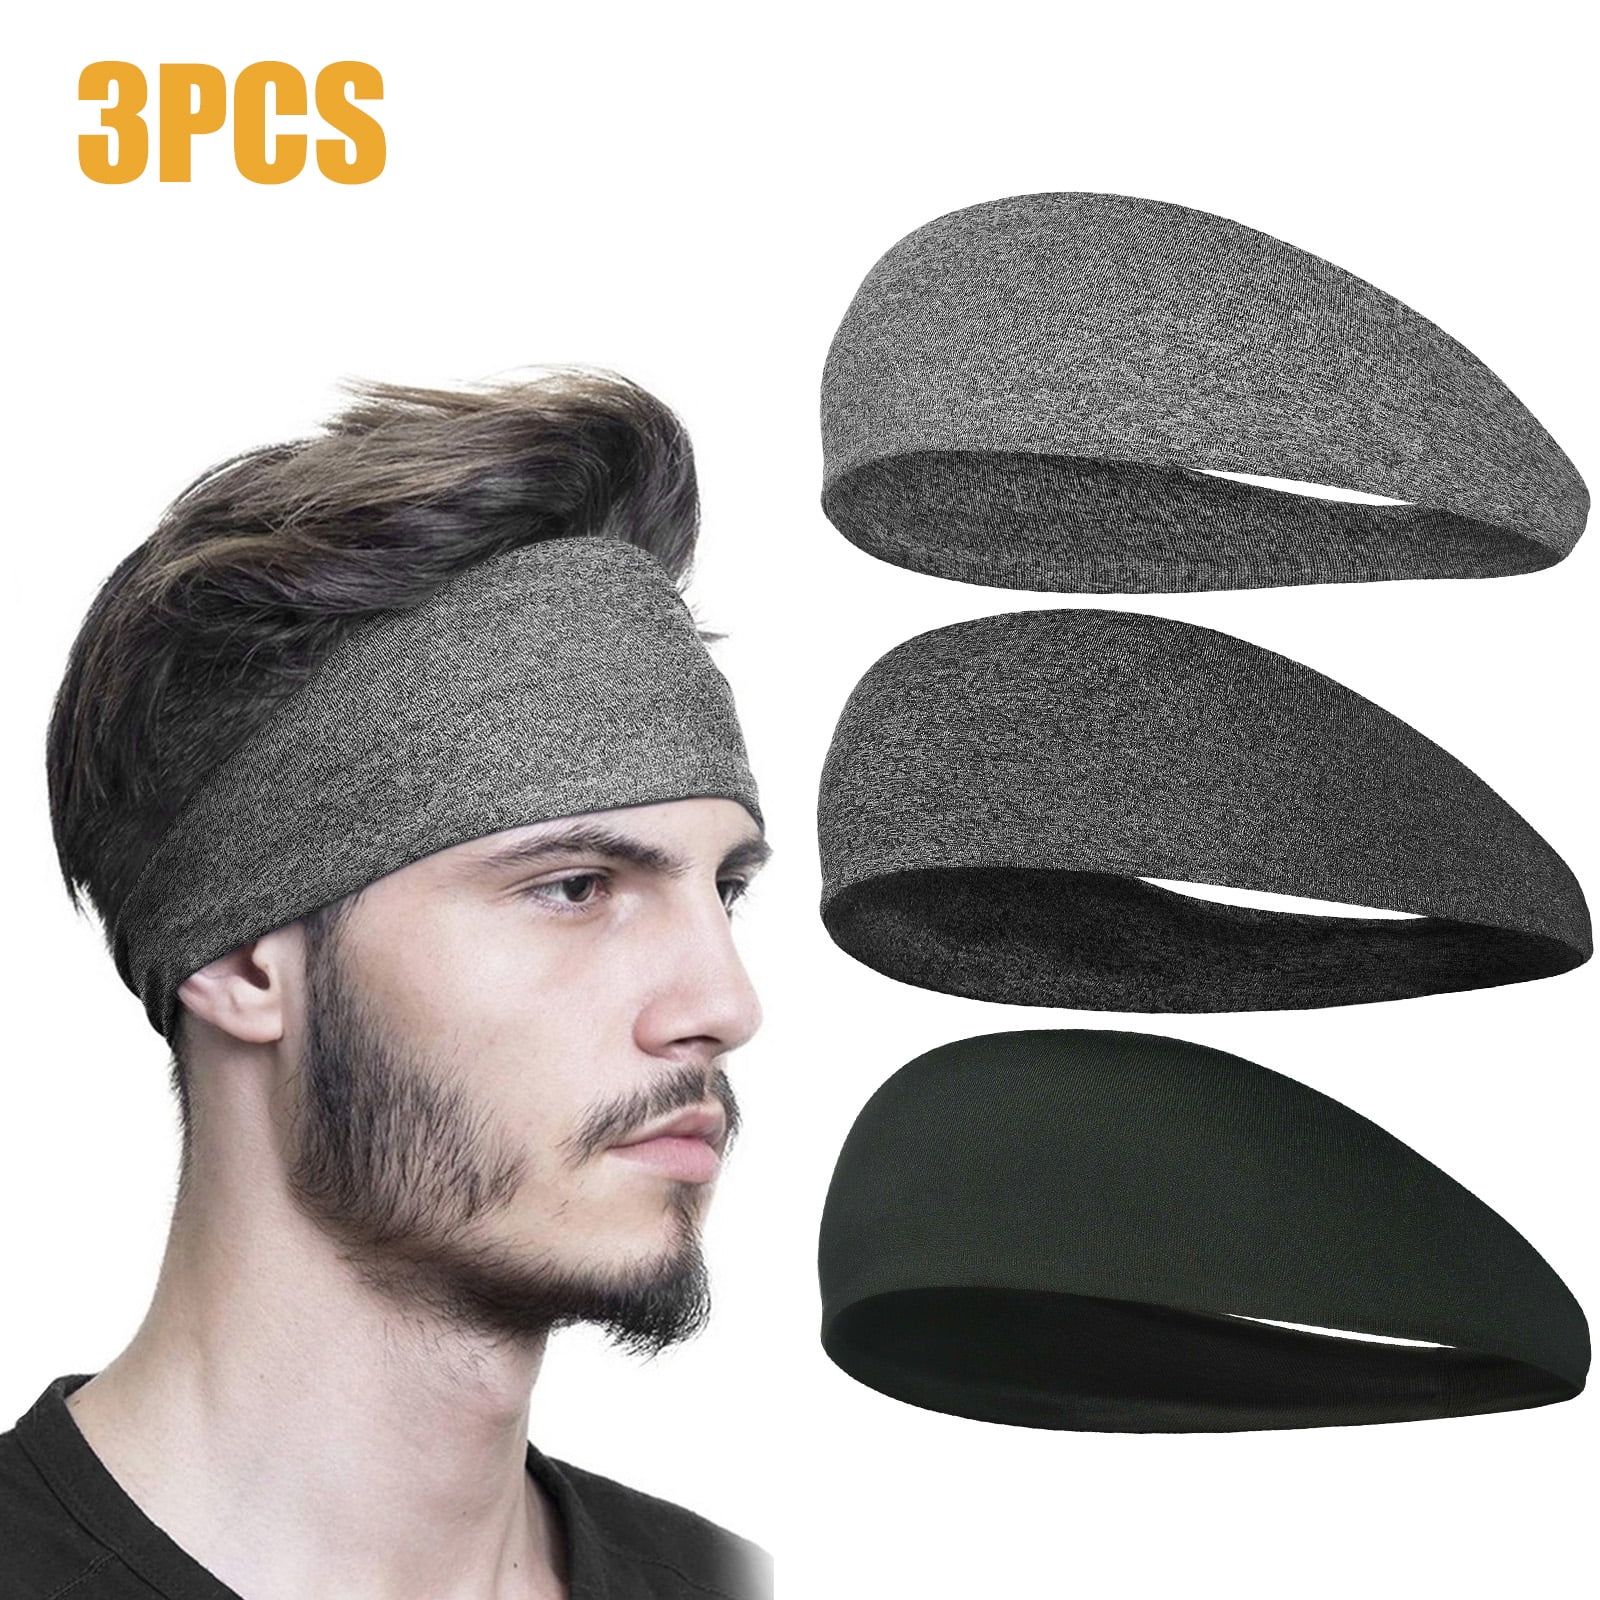 Sports Tennis Hairband 2 Wrist Bands + 1 Headband Wilson Premium Sweatband SET 